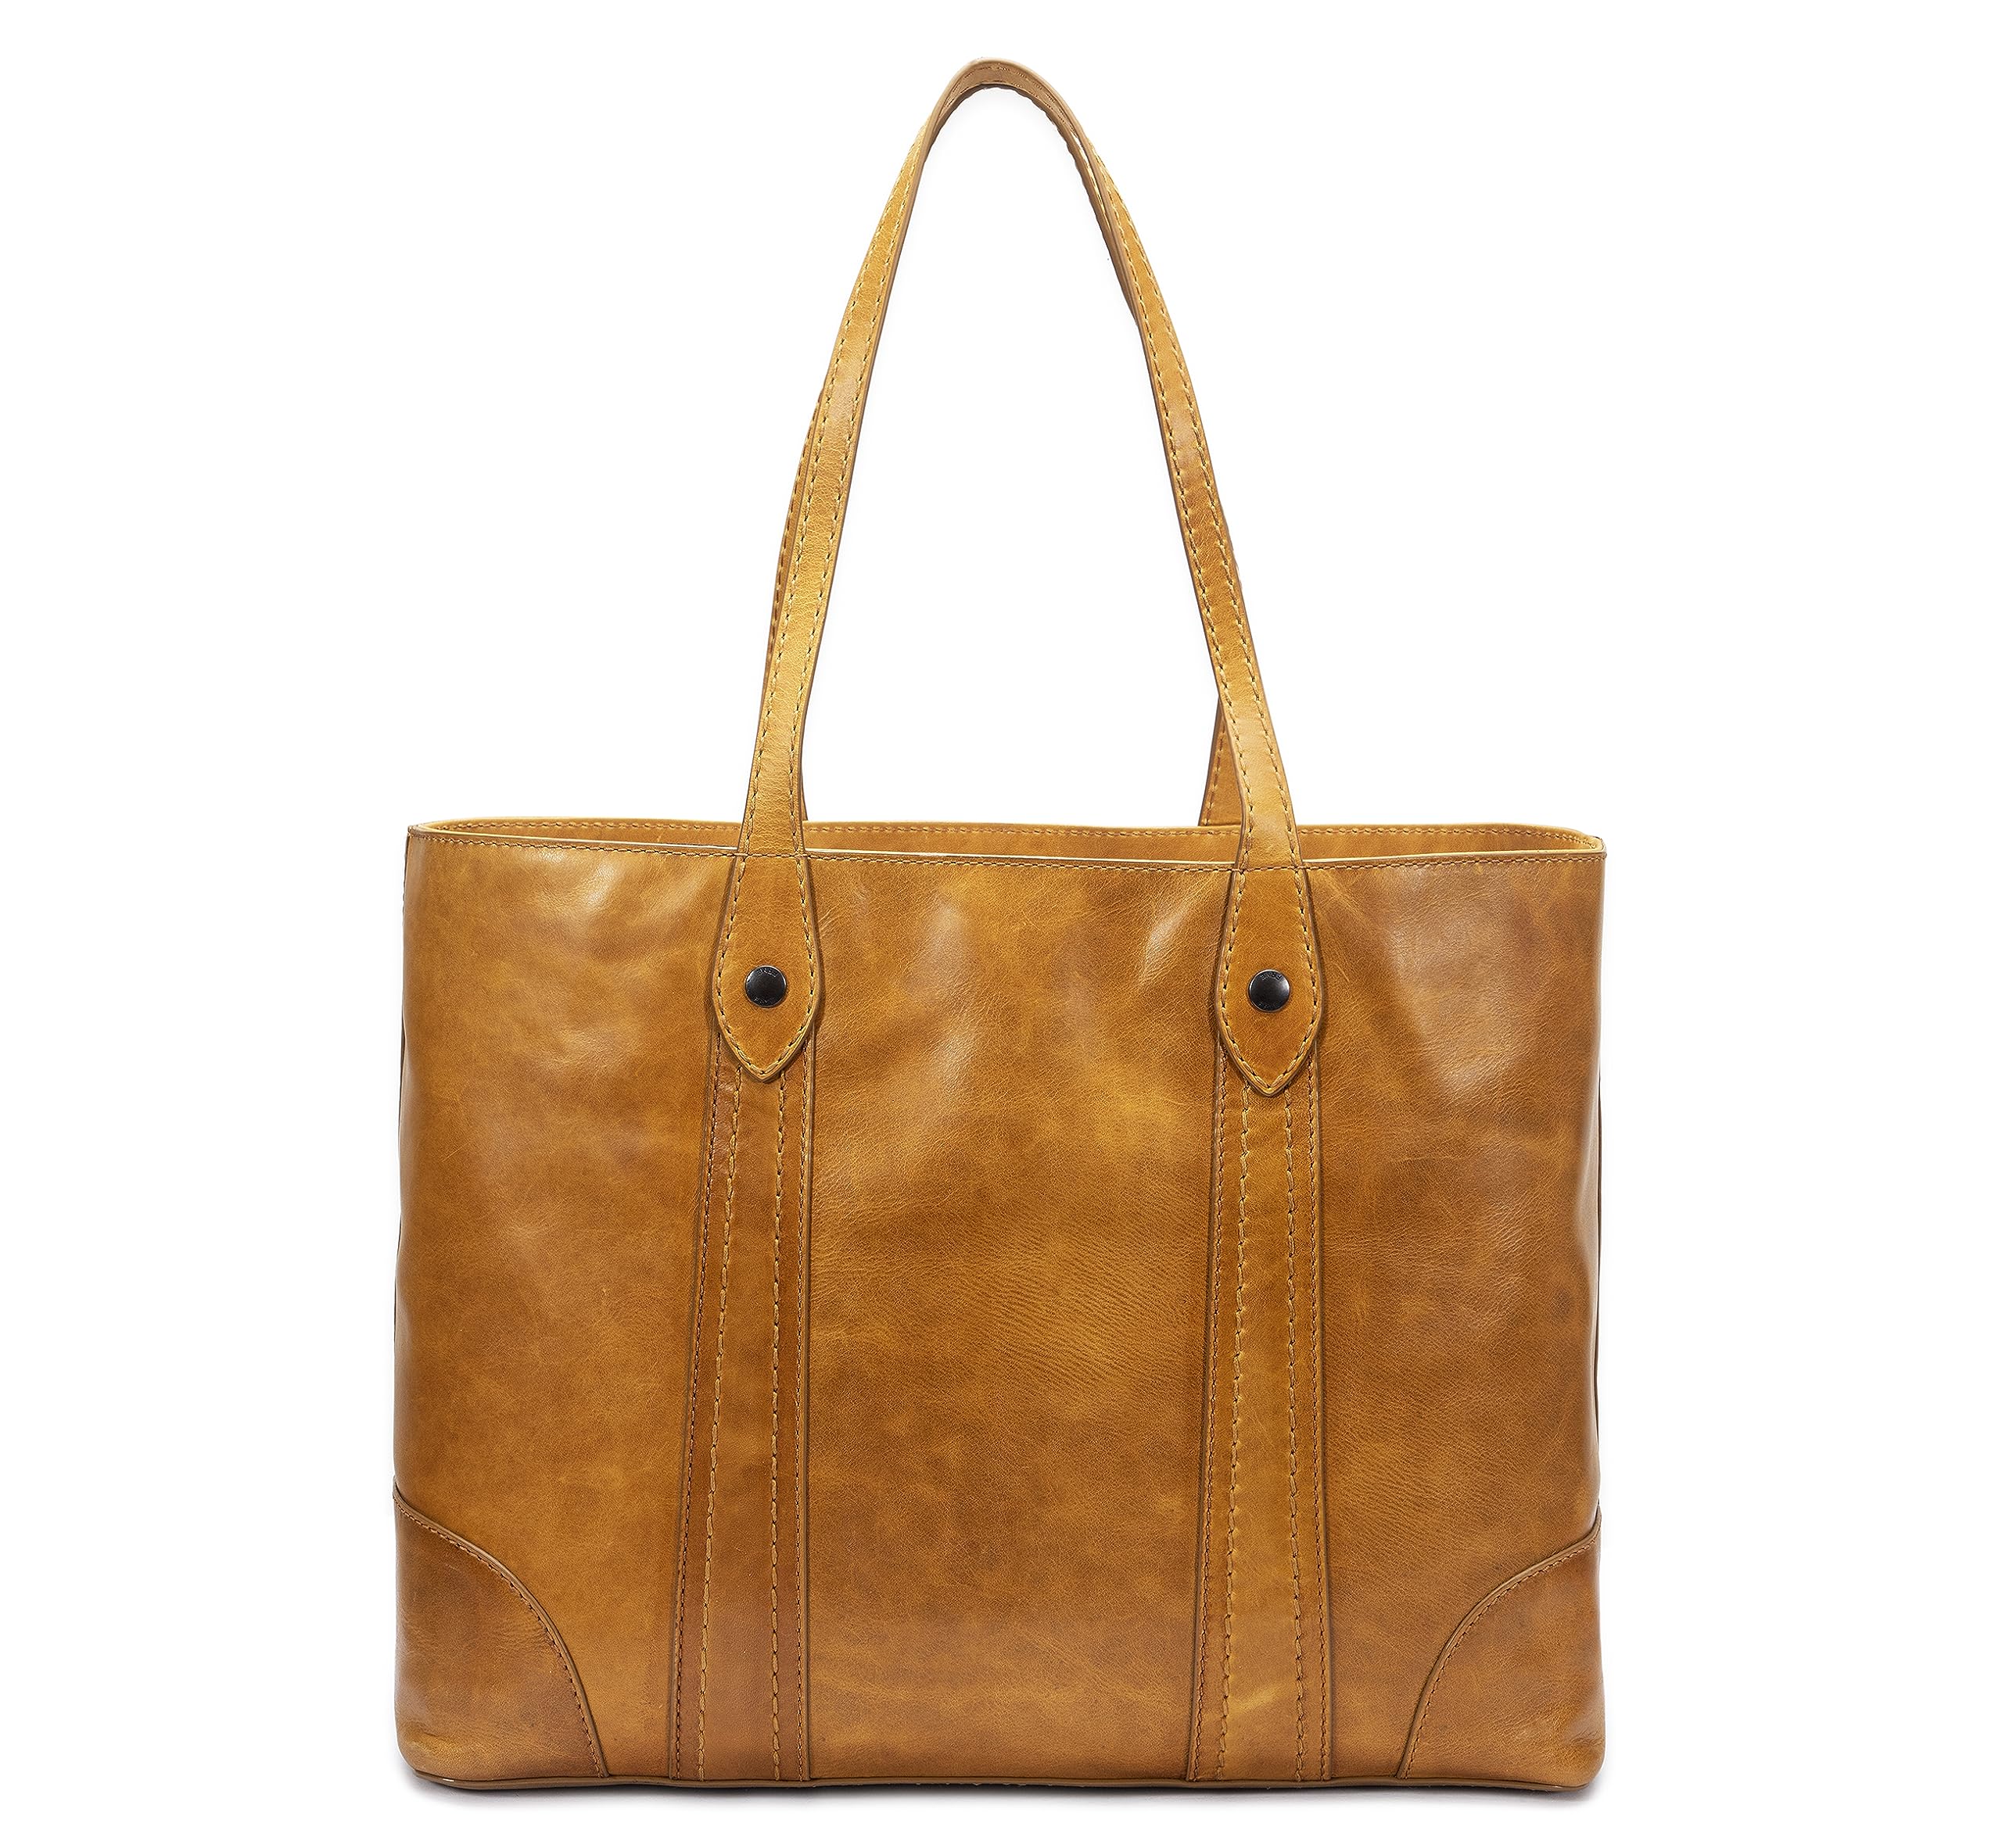 FRYE Melissa Shopper Leather Tote Bag